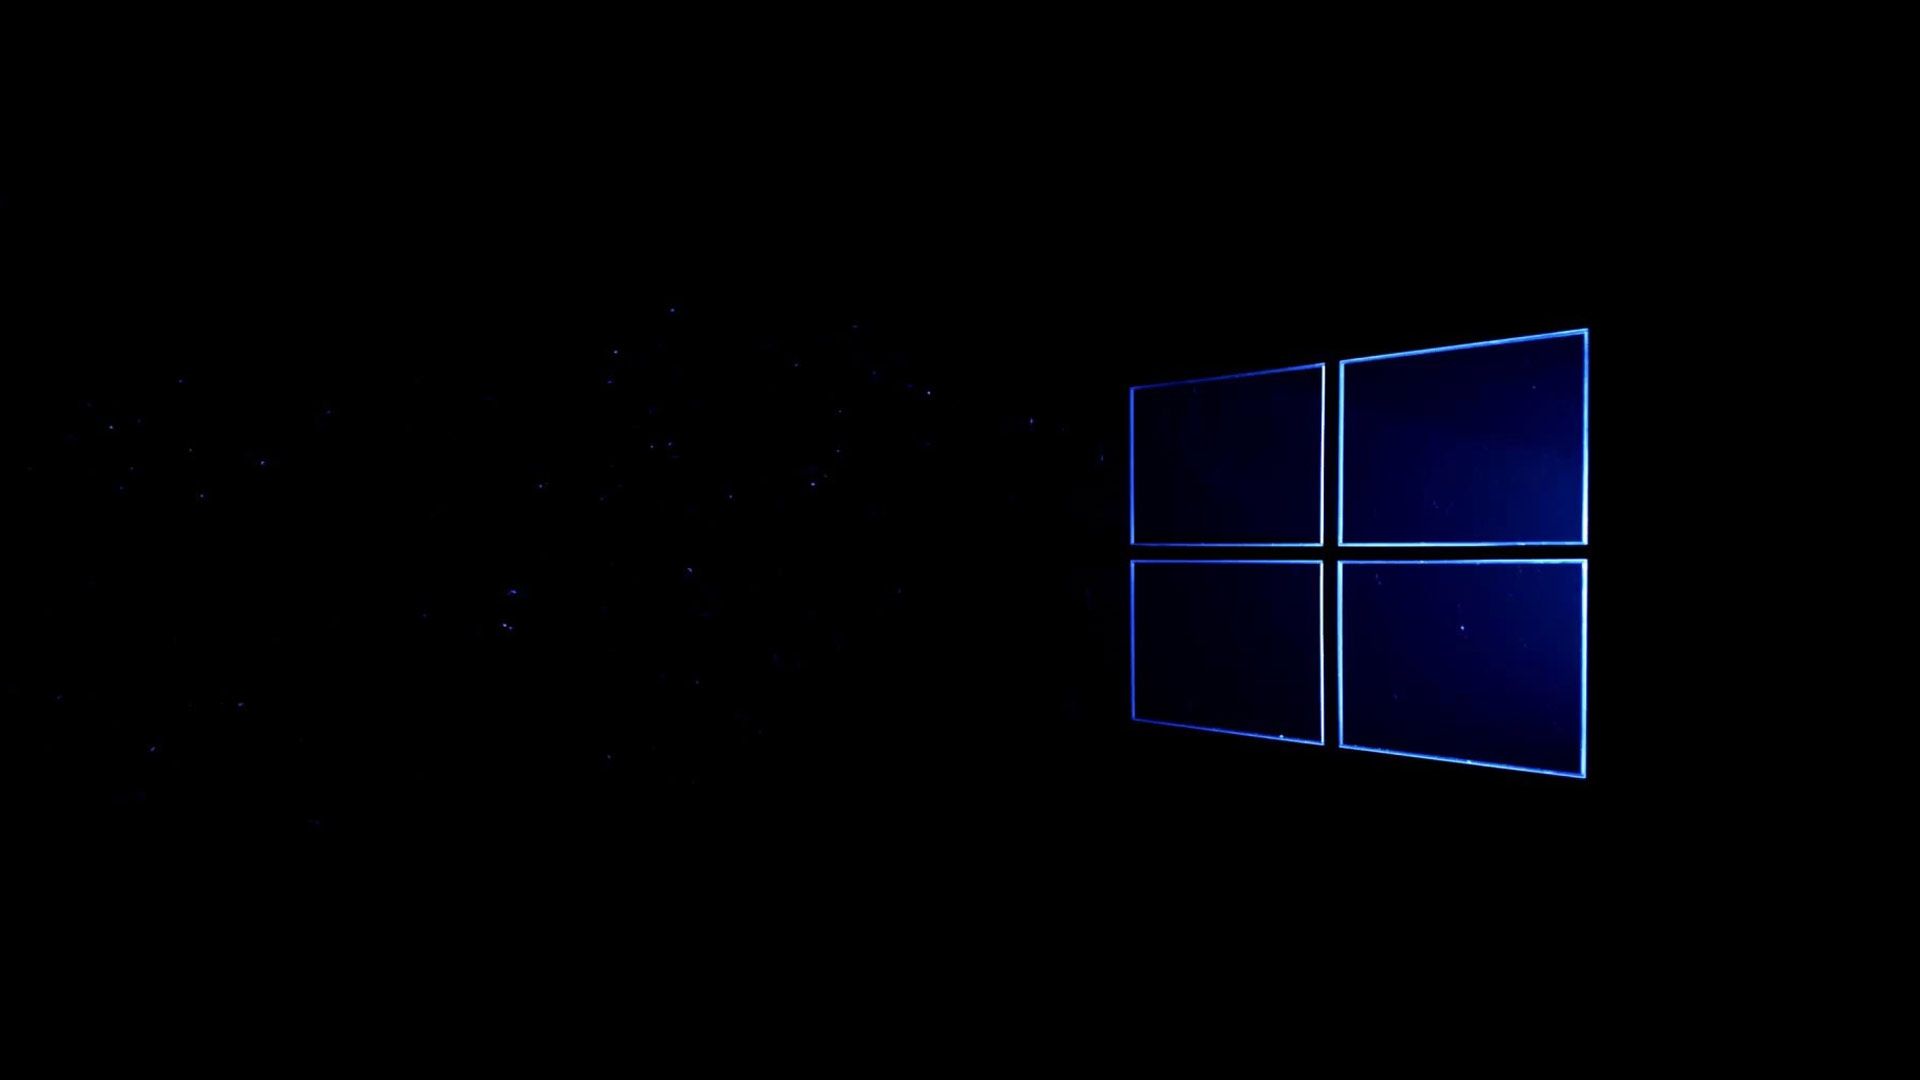 Windows Wallpapers 1080p